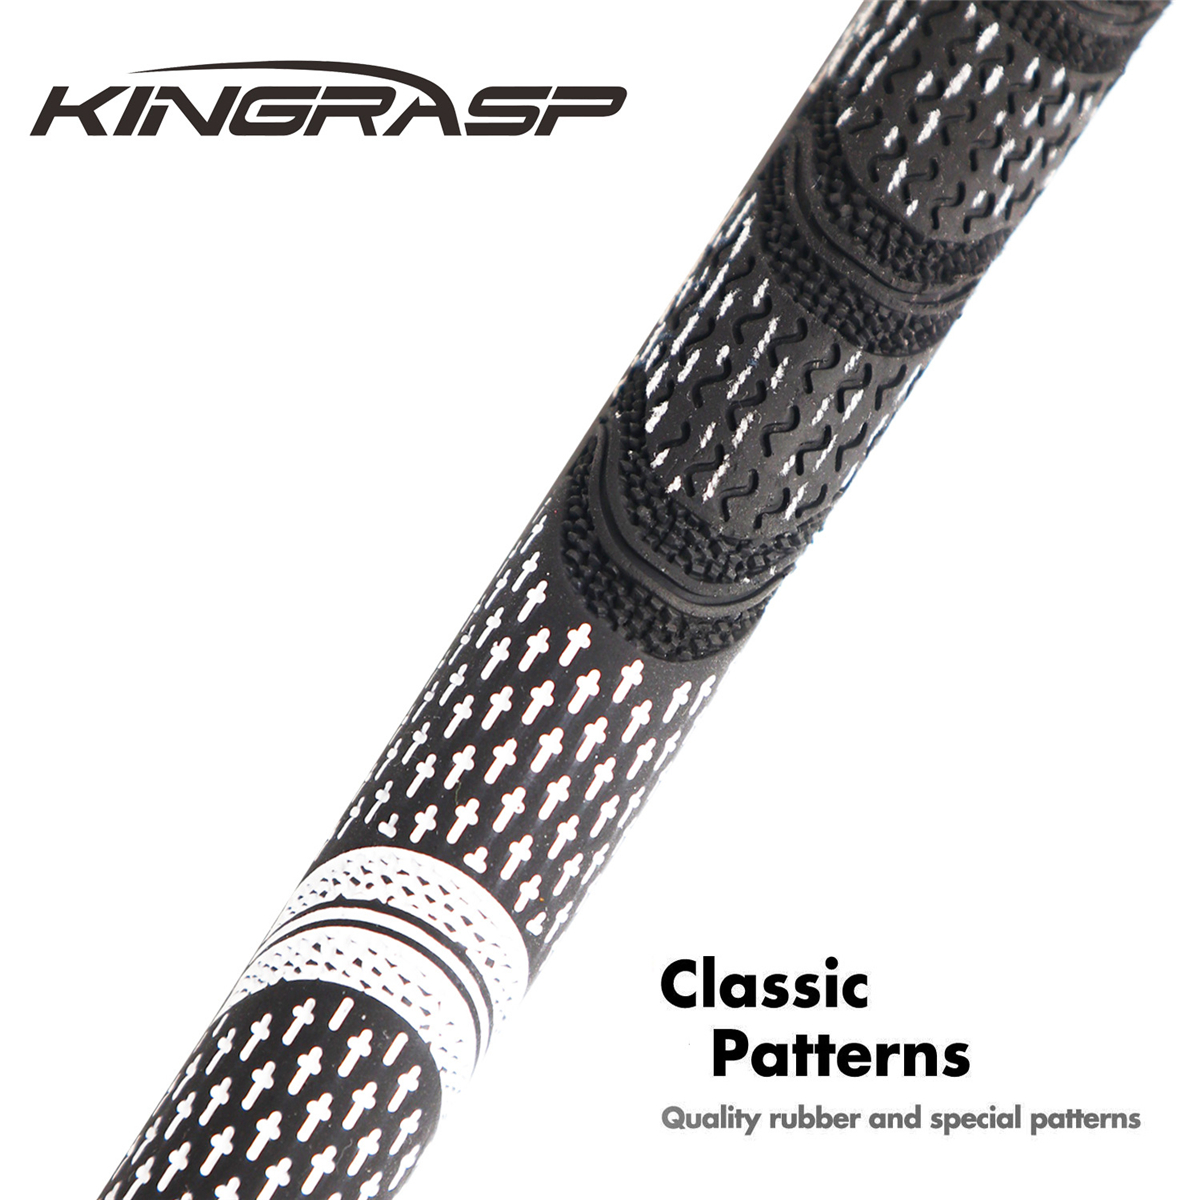 Kingrasp-Golf-Grip-Multicolor-Compound-Golf-Grips-Anti-Slip-Standard-Grip-1549488-2